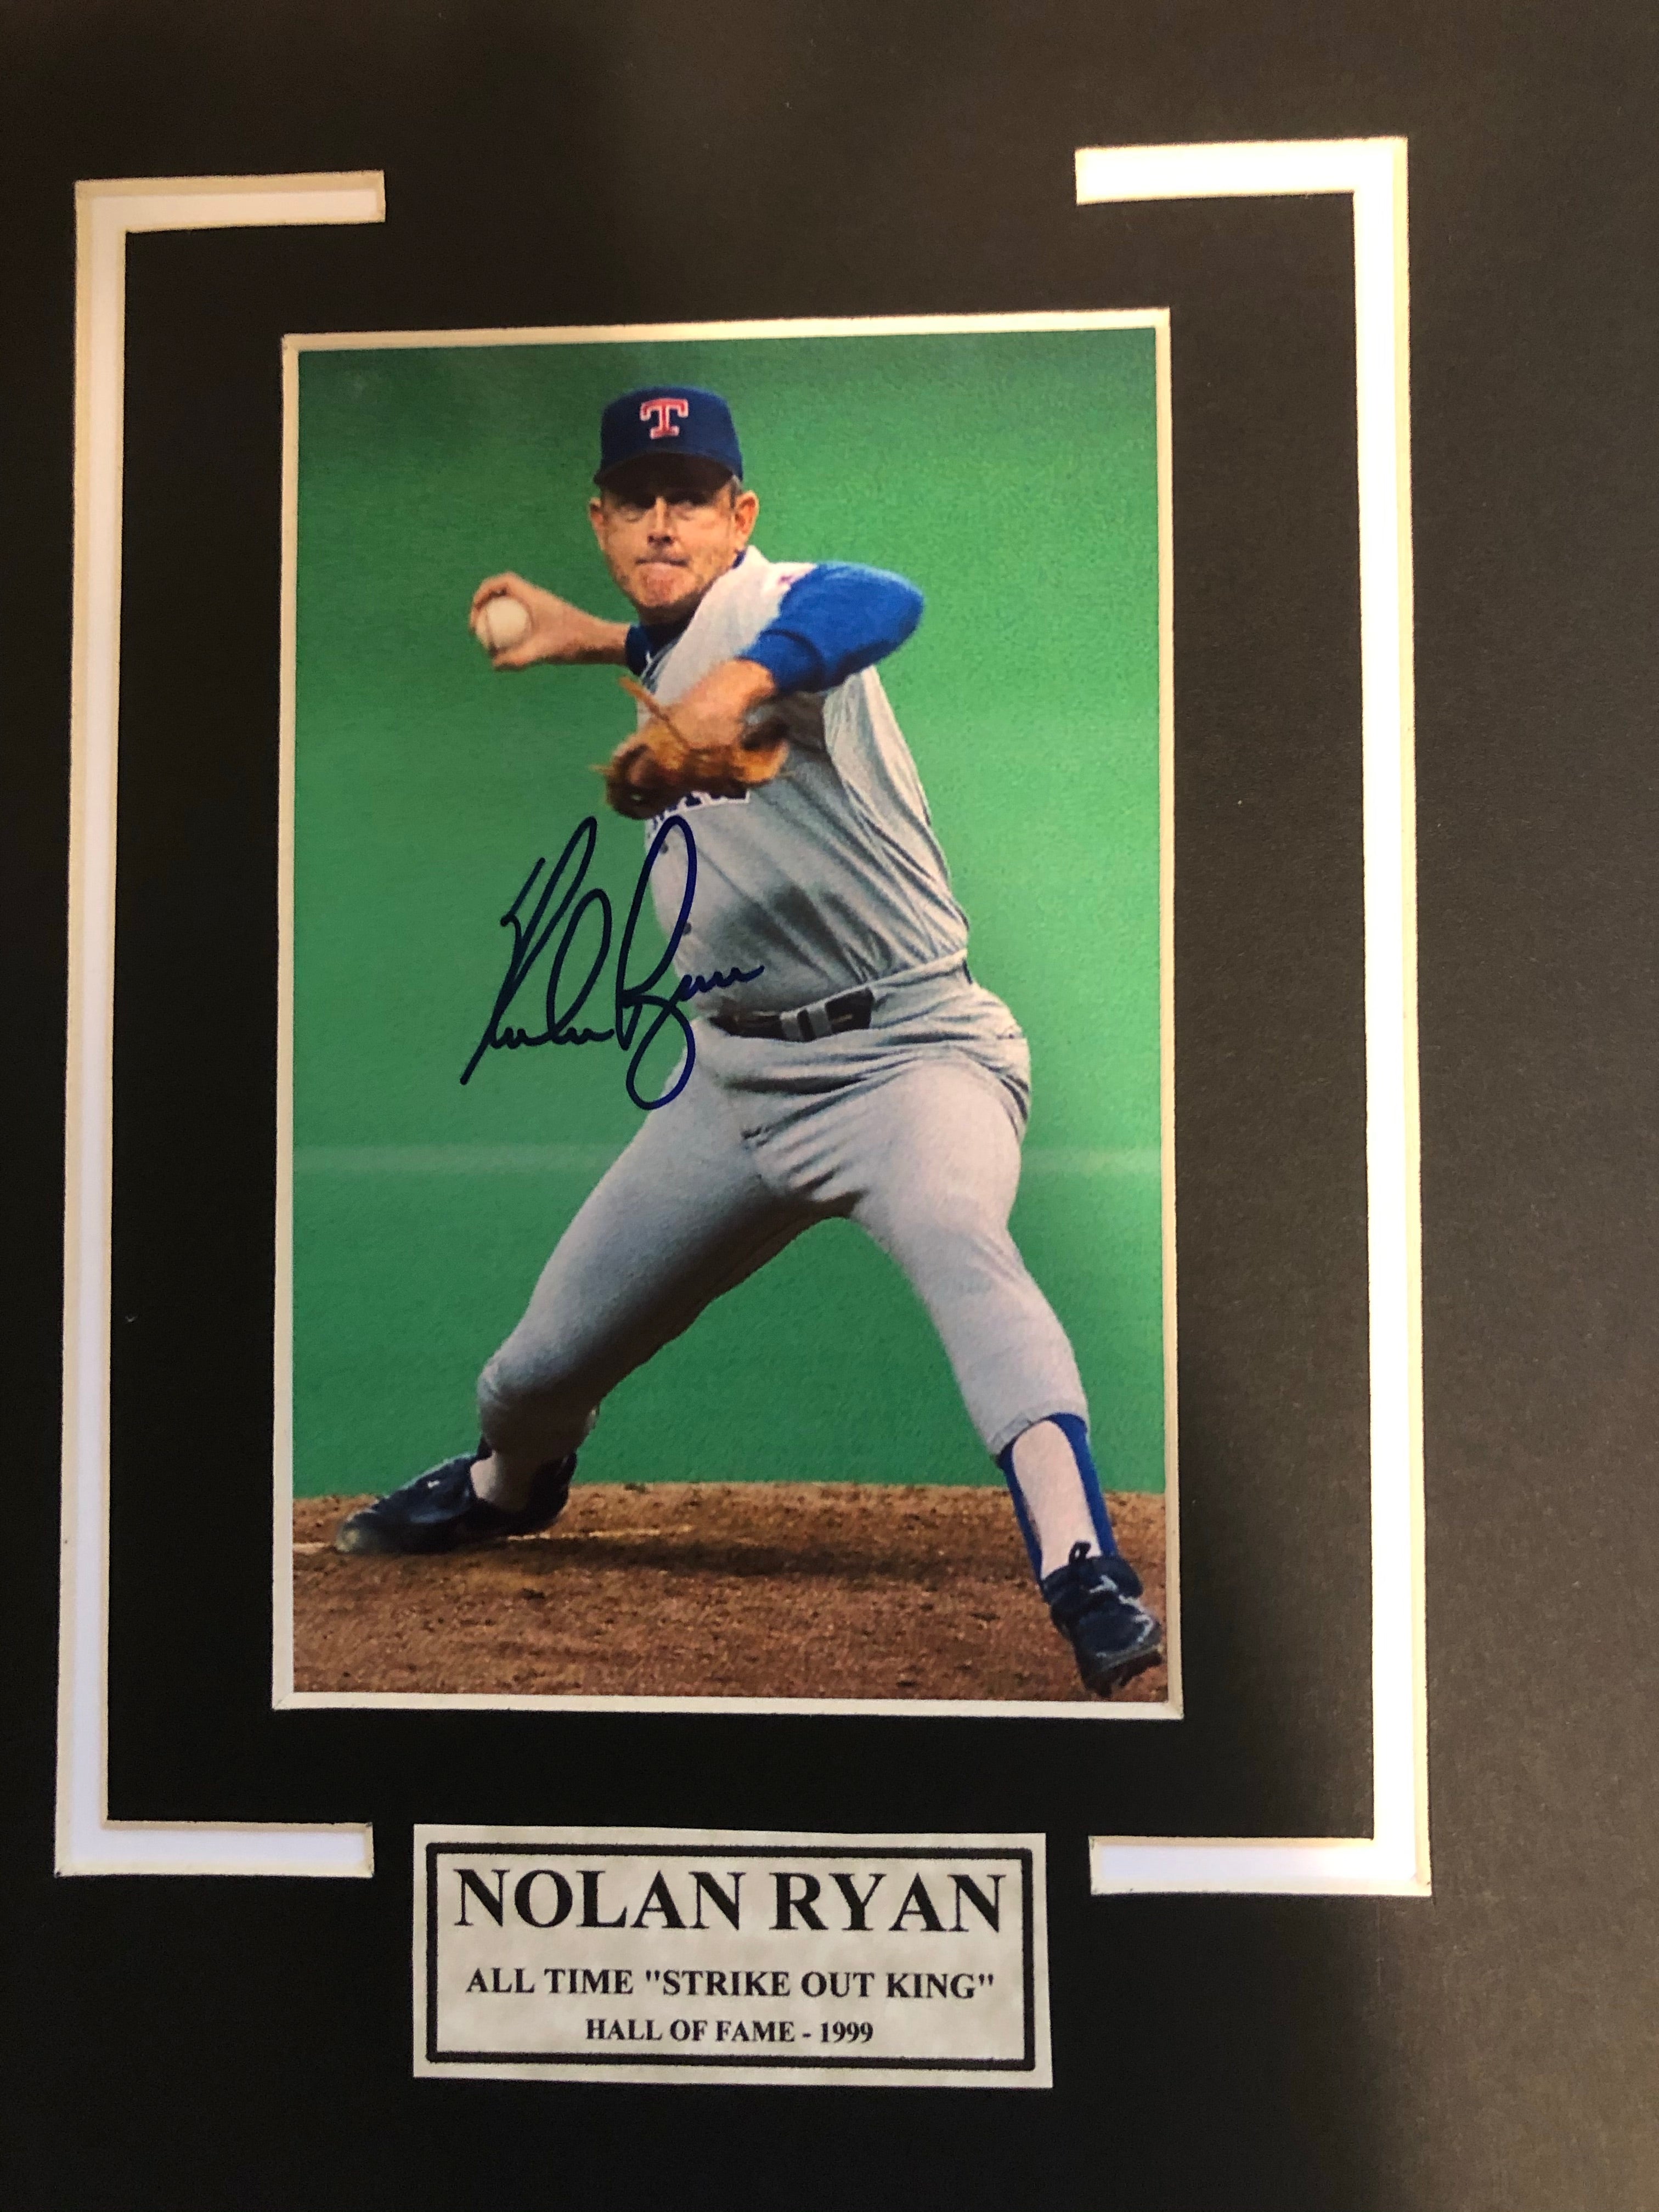 Nolan Ryan long shot signed matted photo with COA